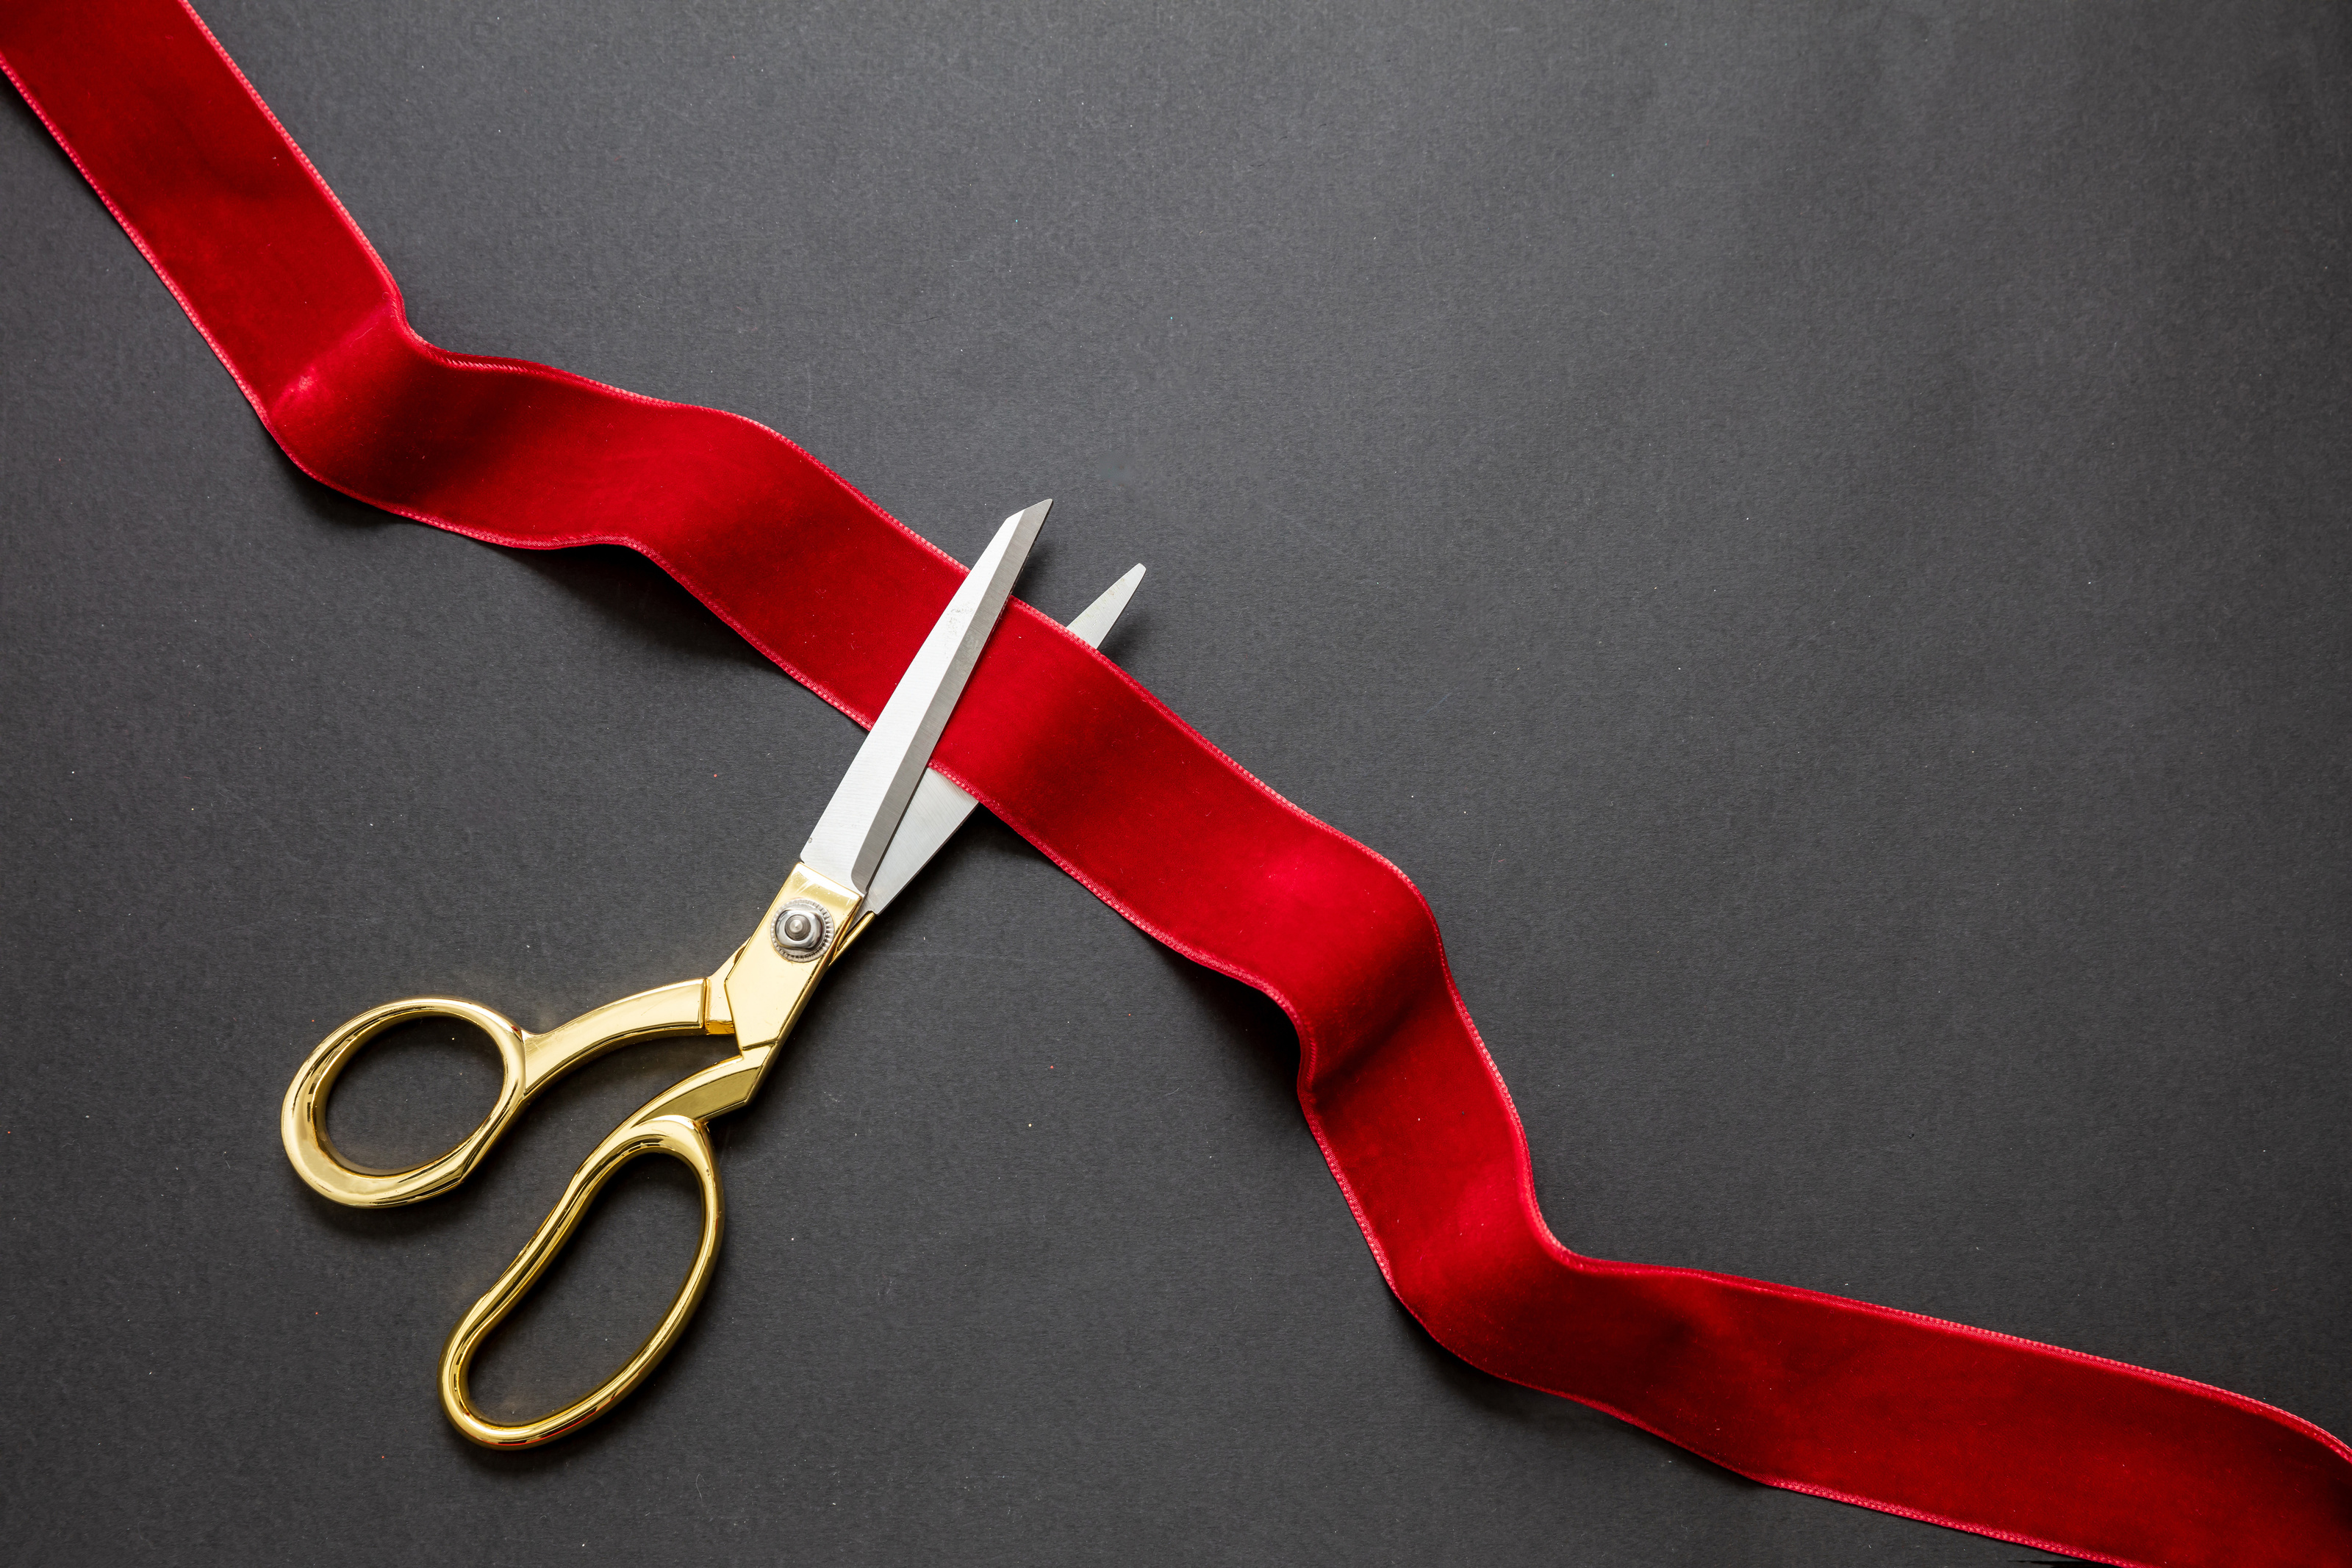 Grand opening, ribbon cut, overhead of gold scissors cutting red velvet ribbon on black